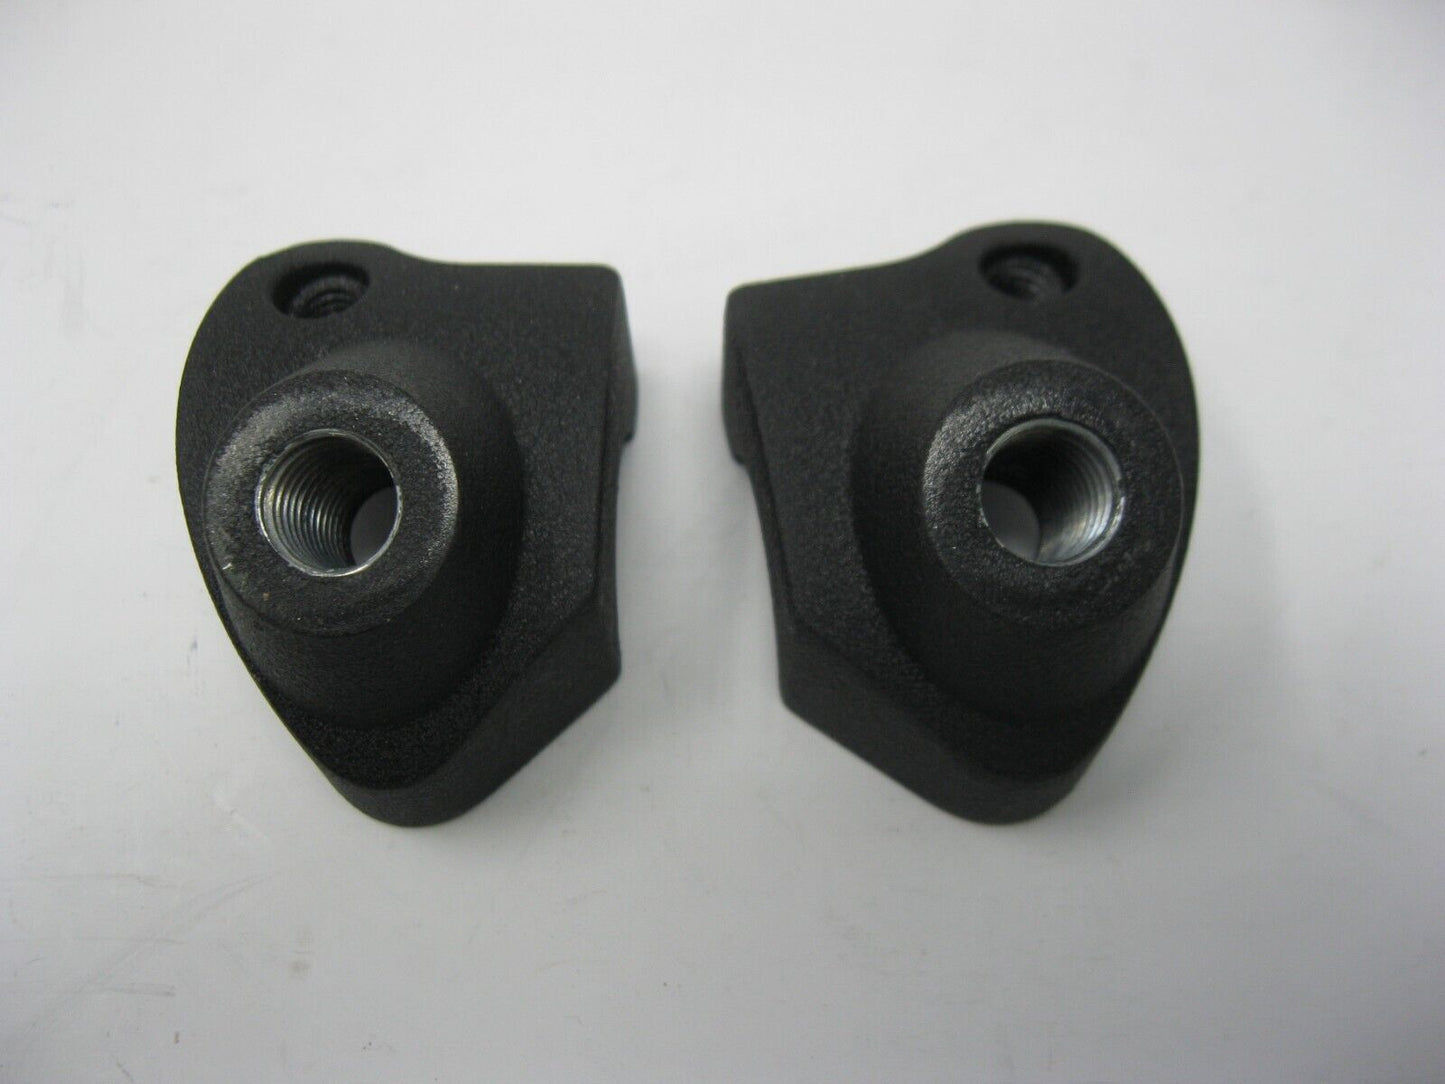 Unbranded Black Wrinkle Finish Risers for 1" Diameter Bars (No Caps or Hardware)